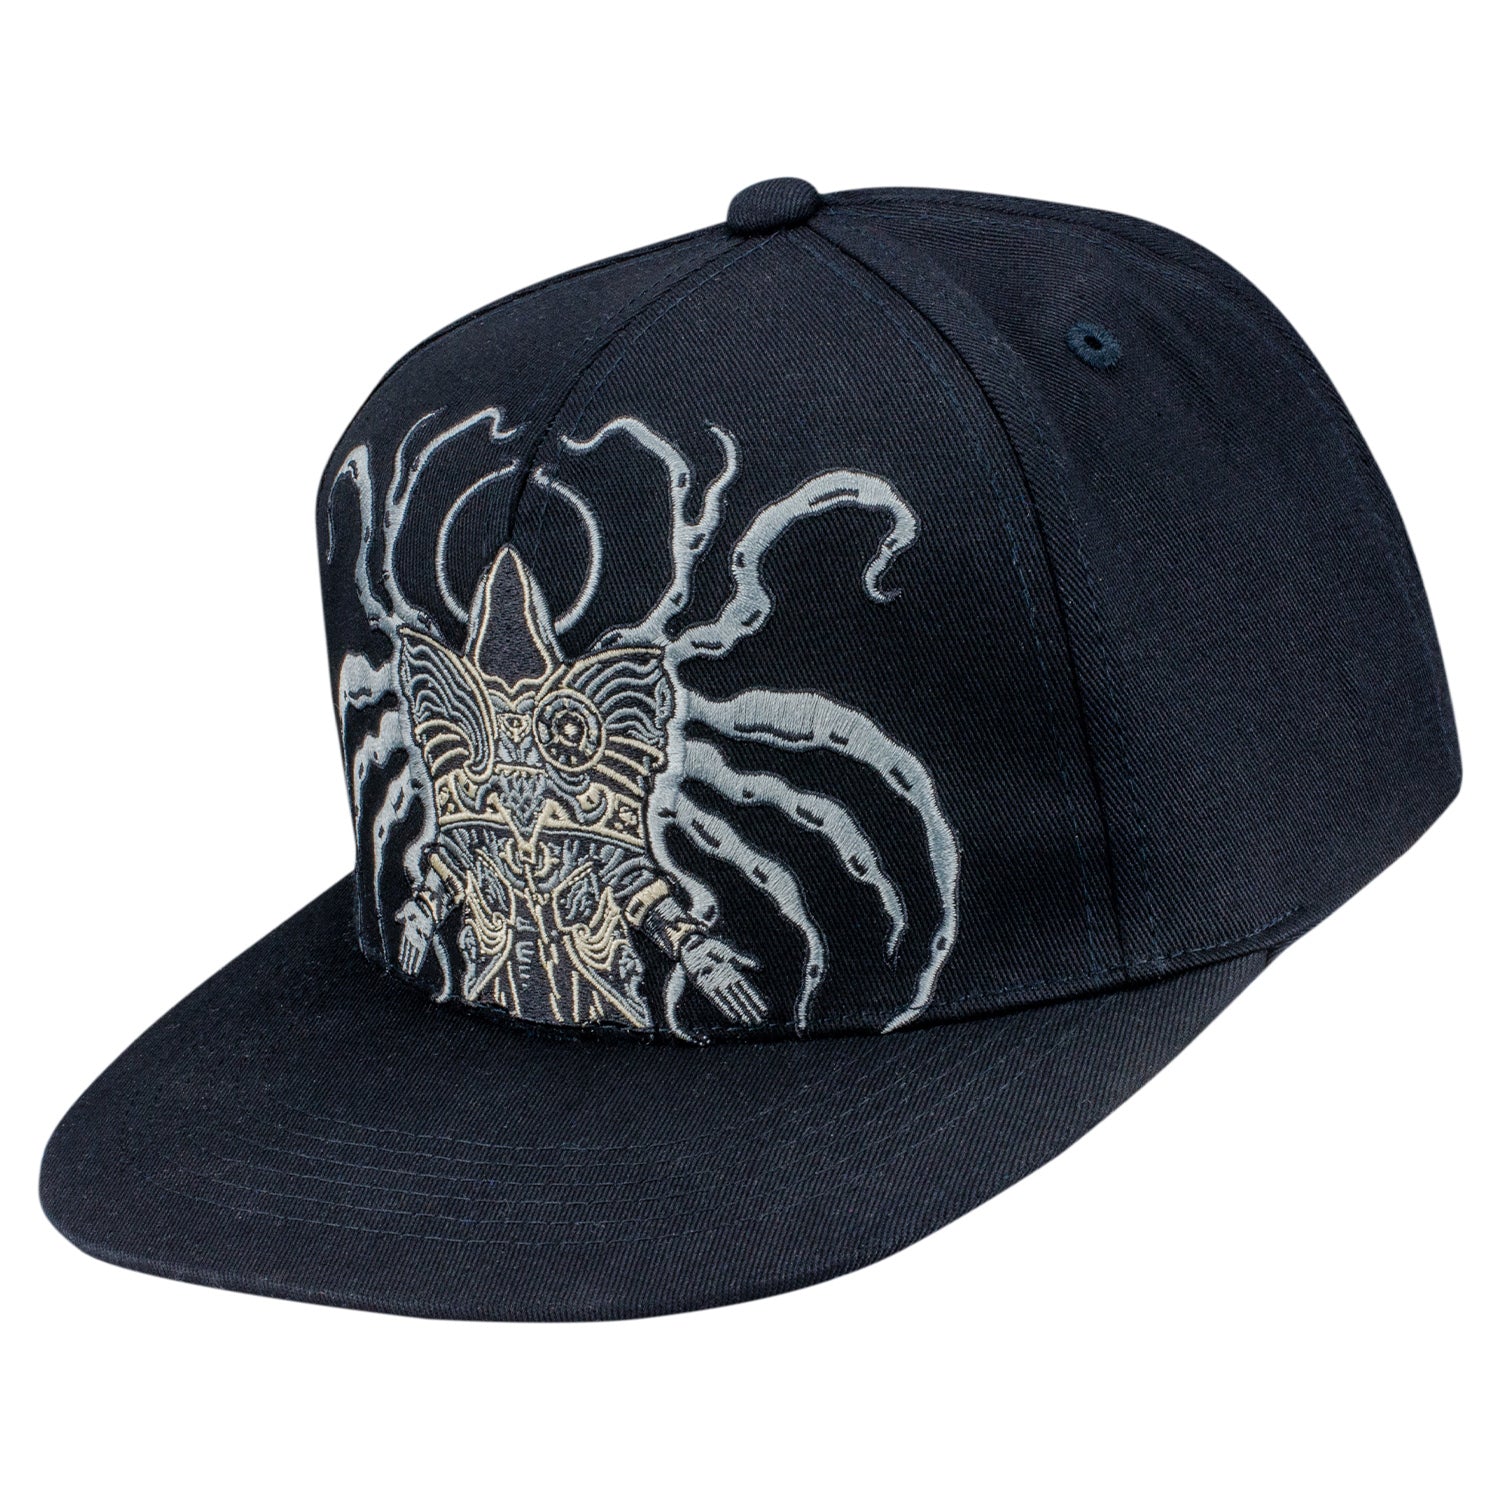 Diablo IV Inarius Snapback Hat - Front View